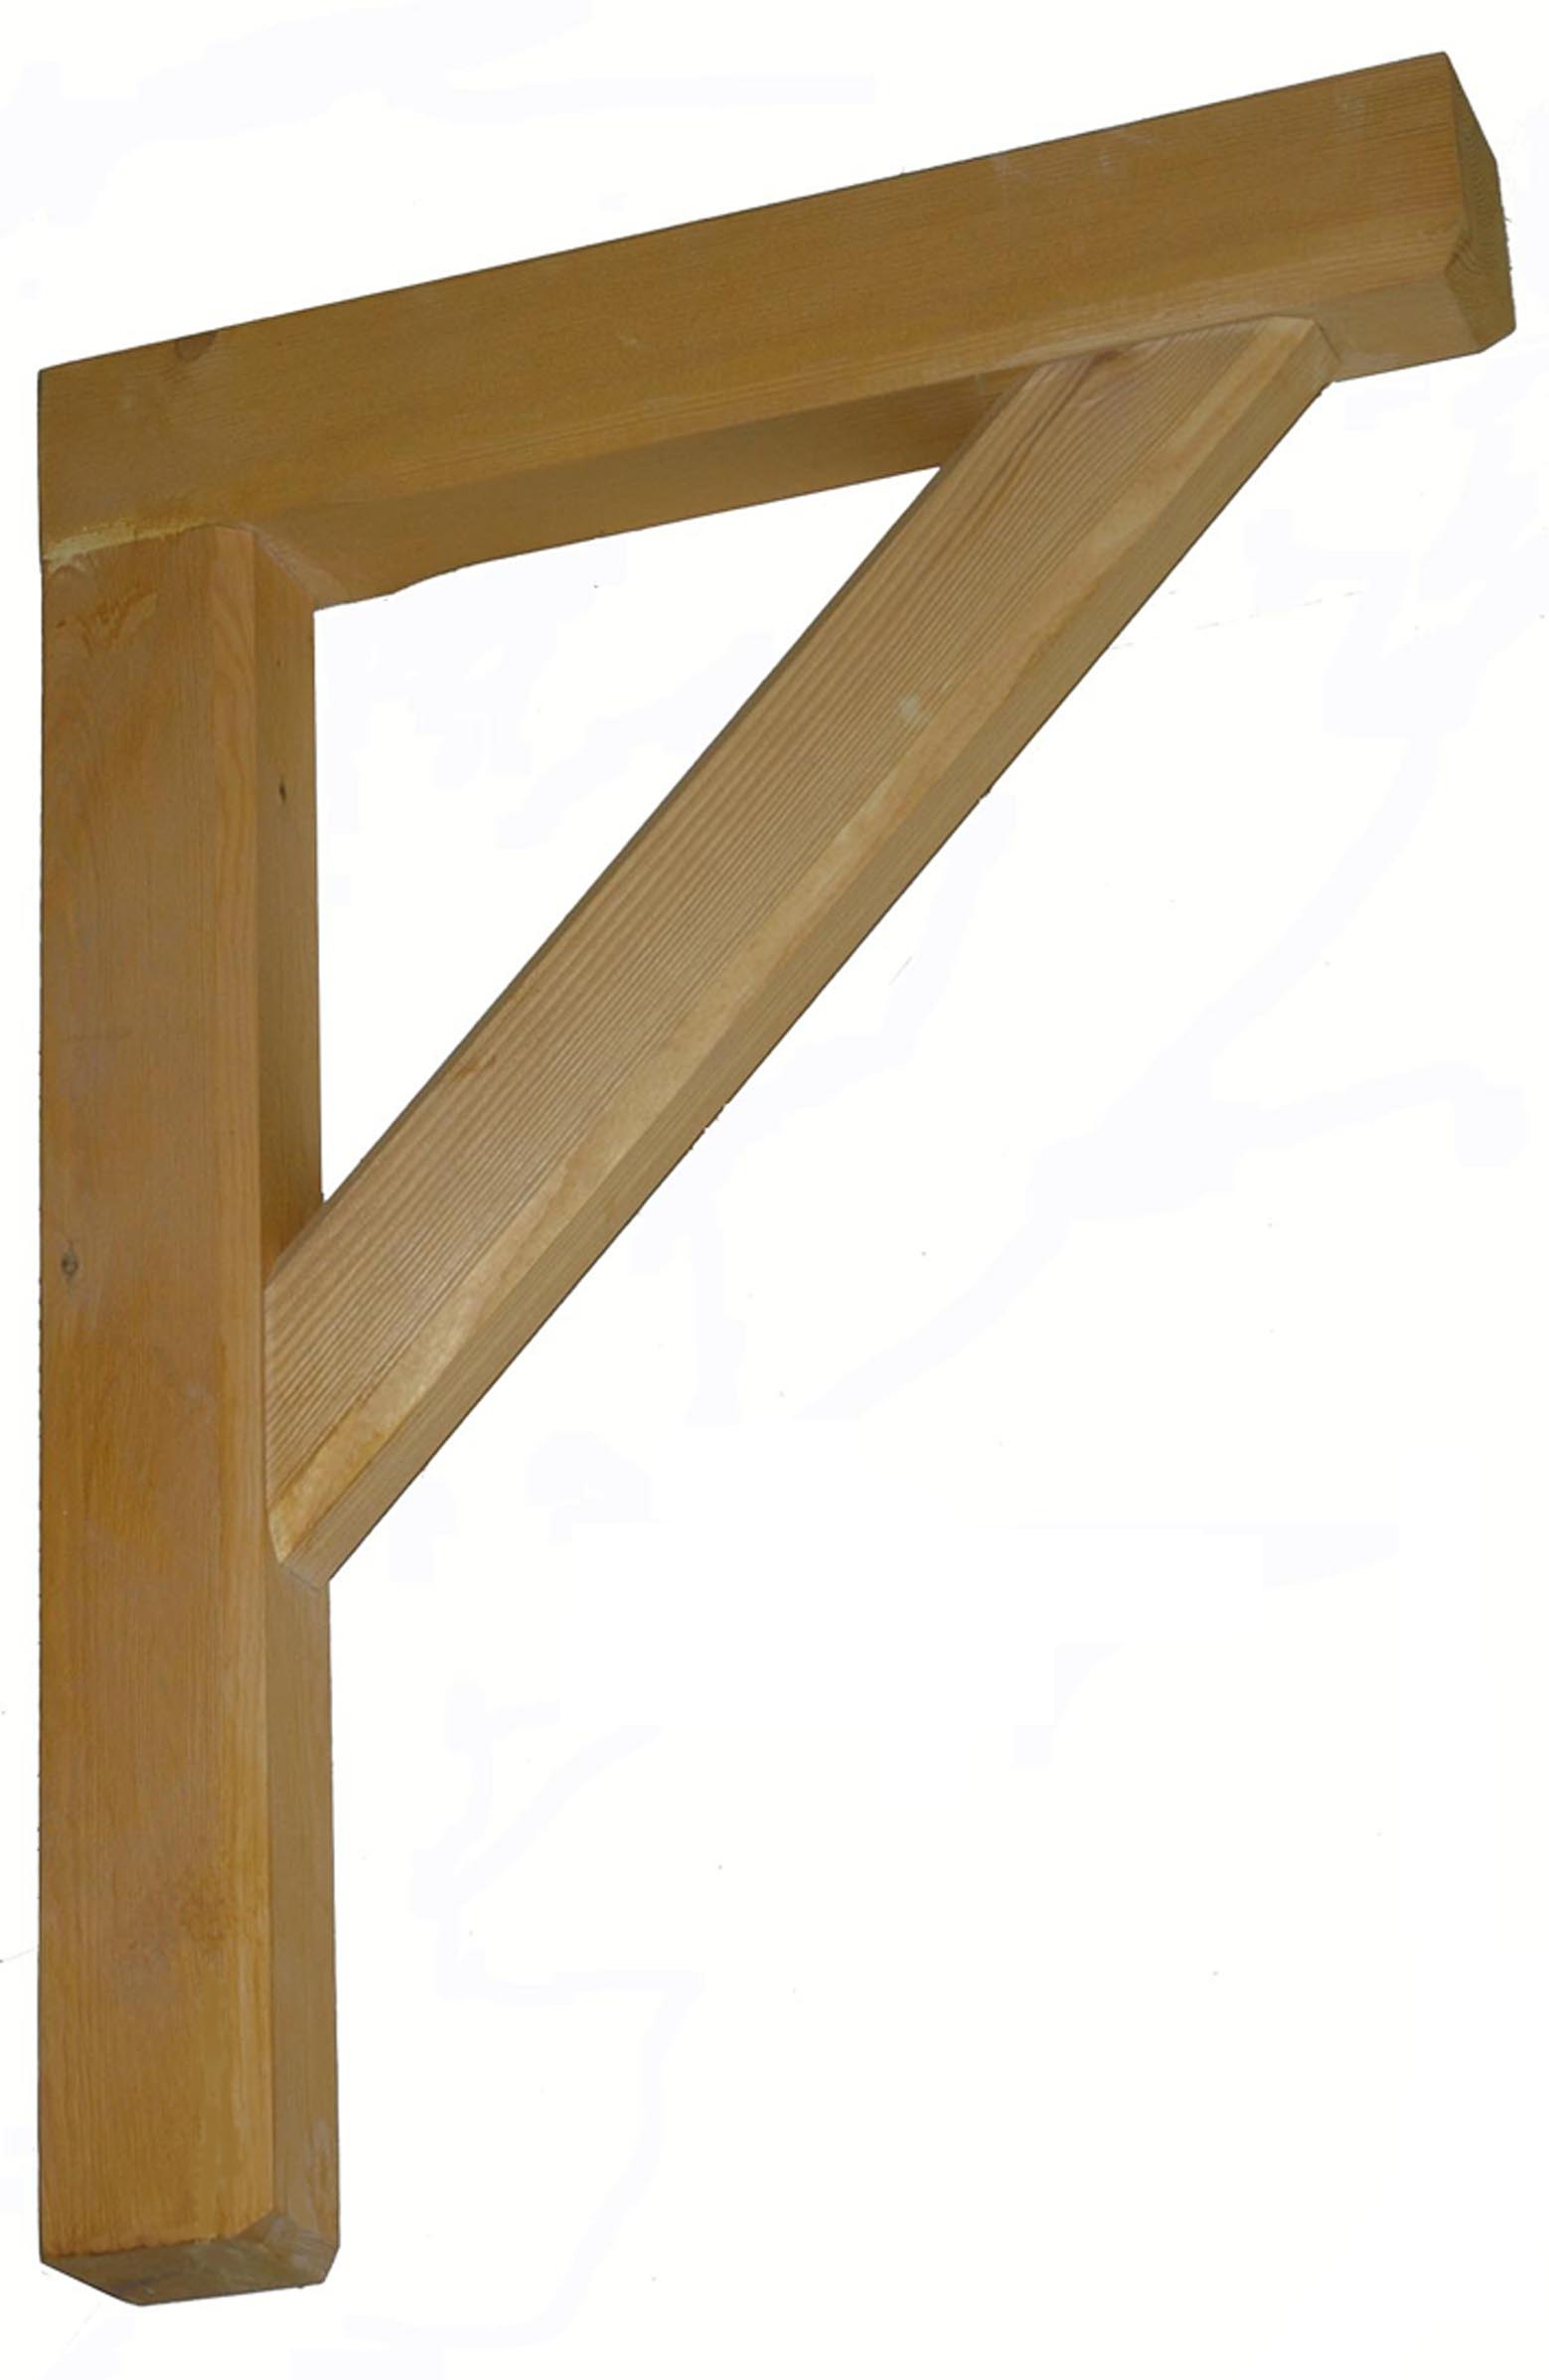 F-G6 wood gallows bracket